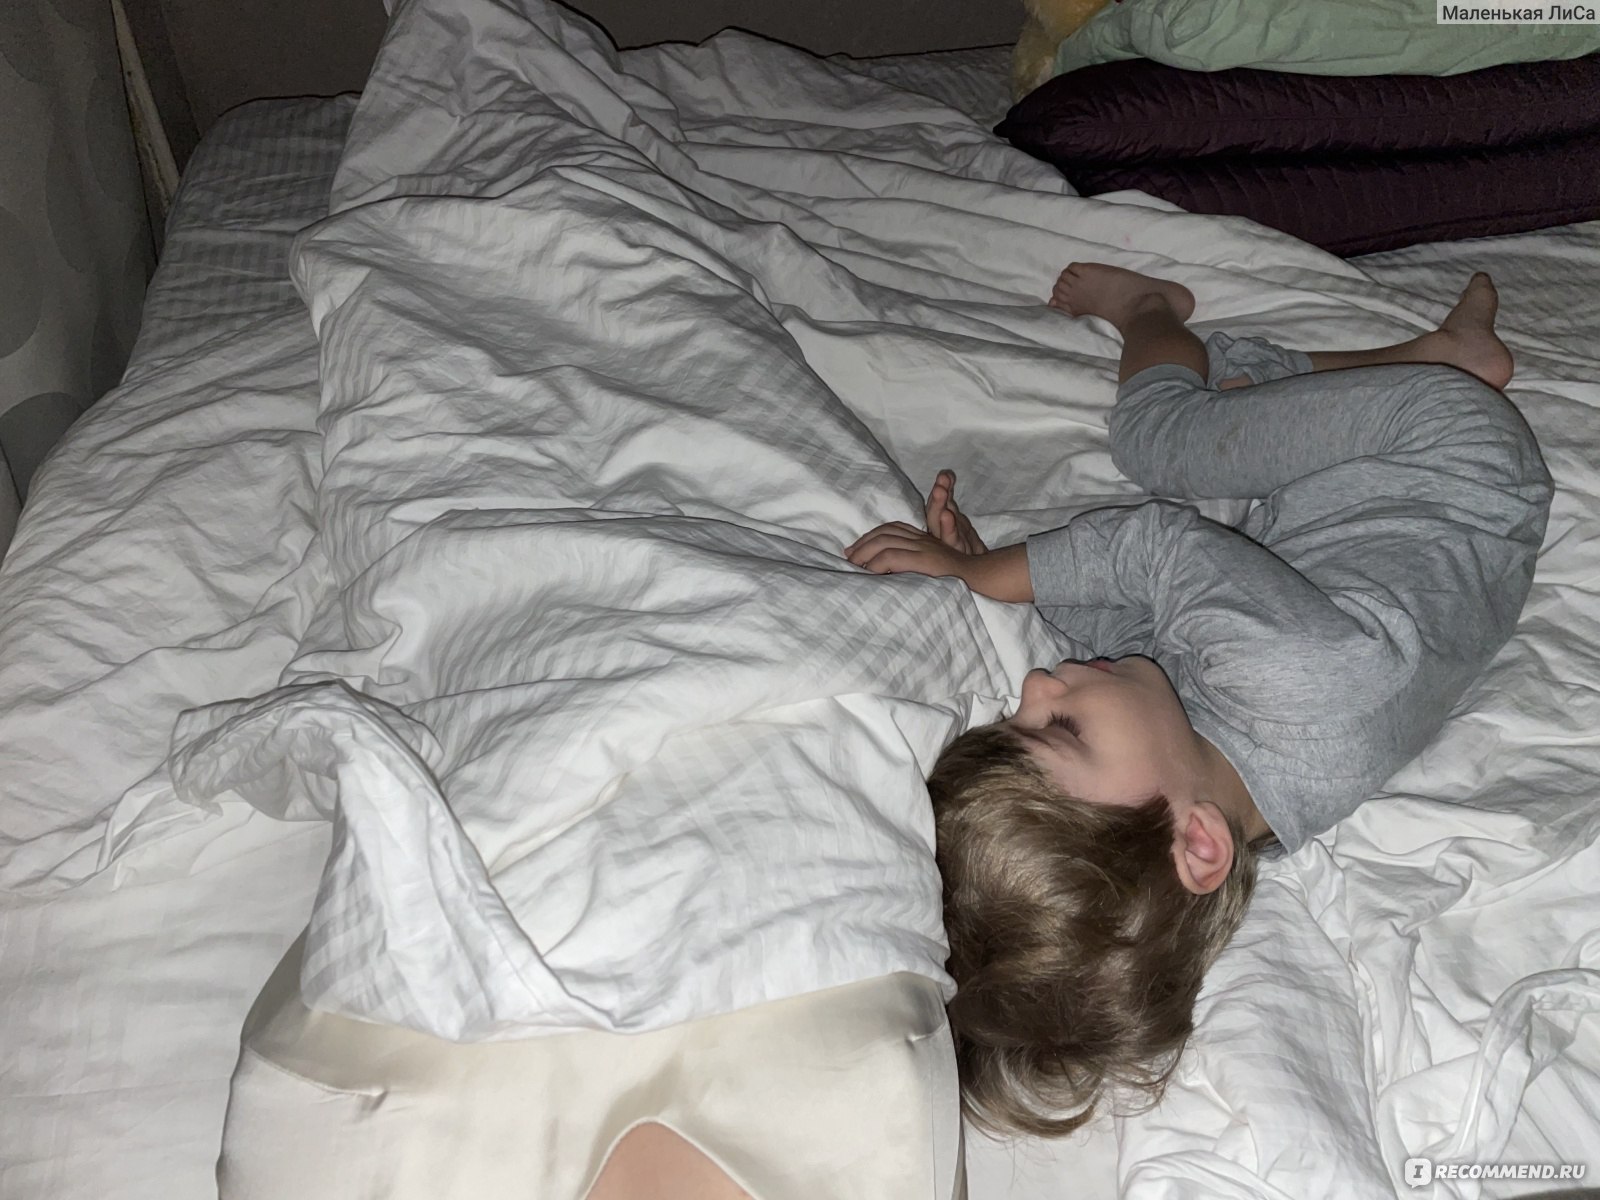 Ребенок упал с двухъярусной кровати во сне